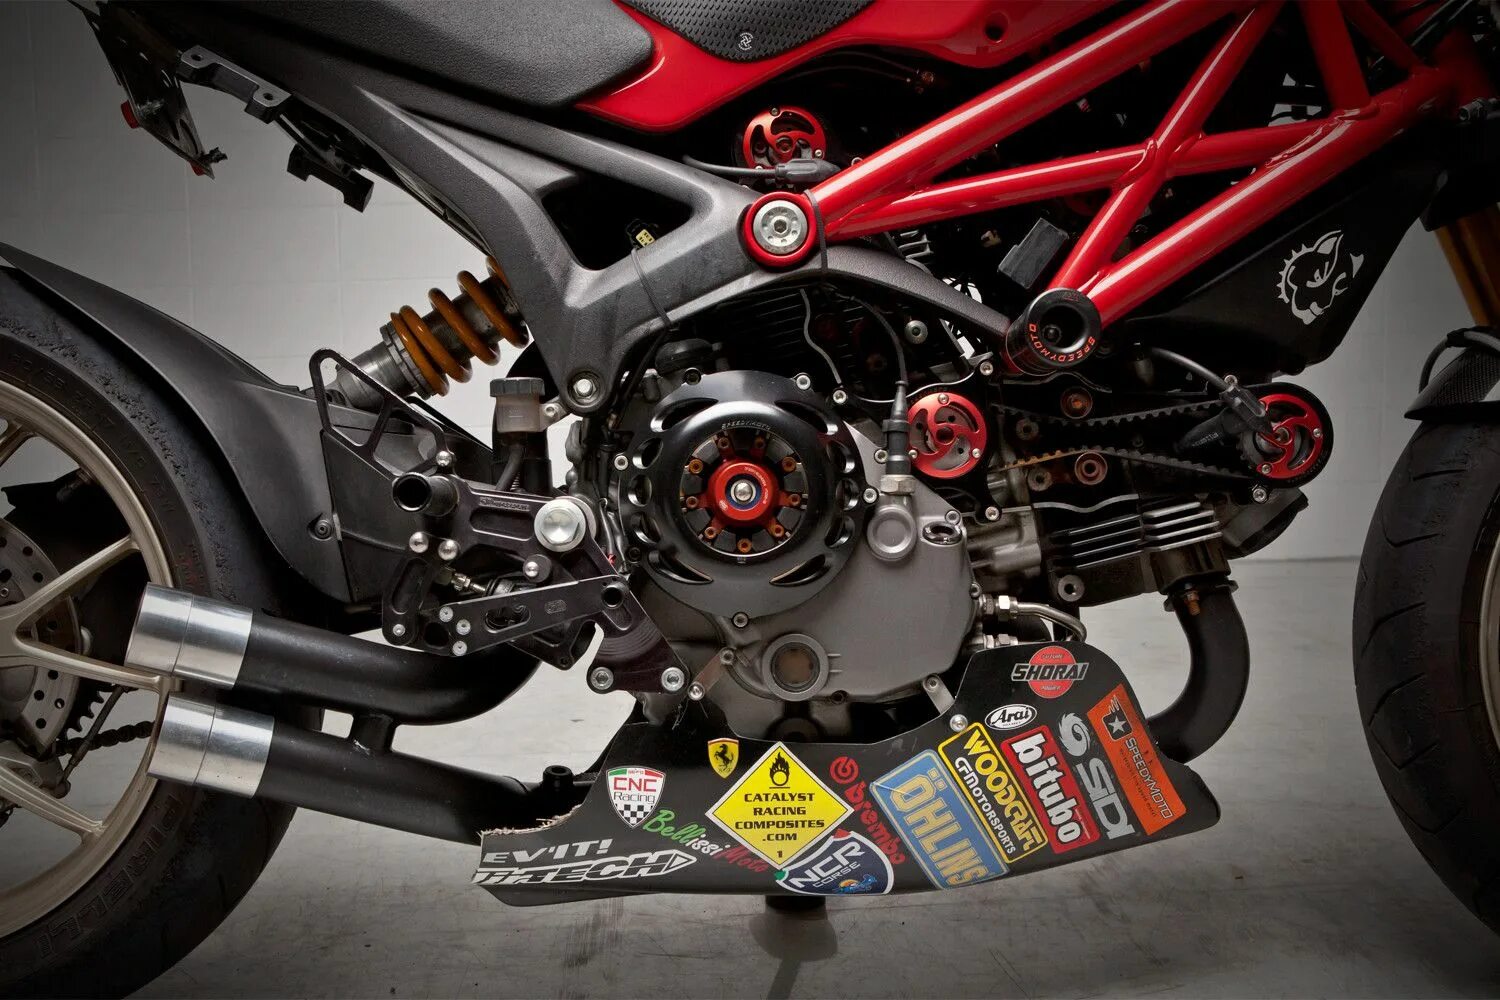 R details. Ducati Monster 1200 engine. Двигатели Ducati Monster. Ducati Monster 1200 Custom. Ducati Monster 796 Exhaust.